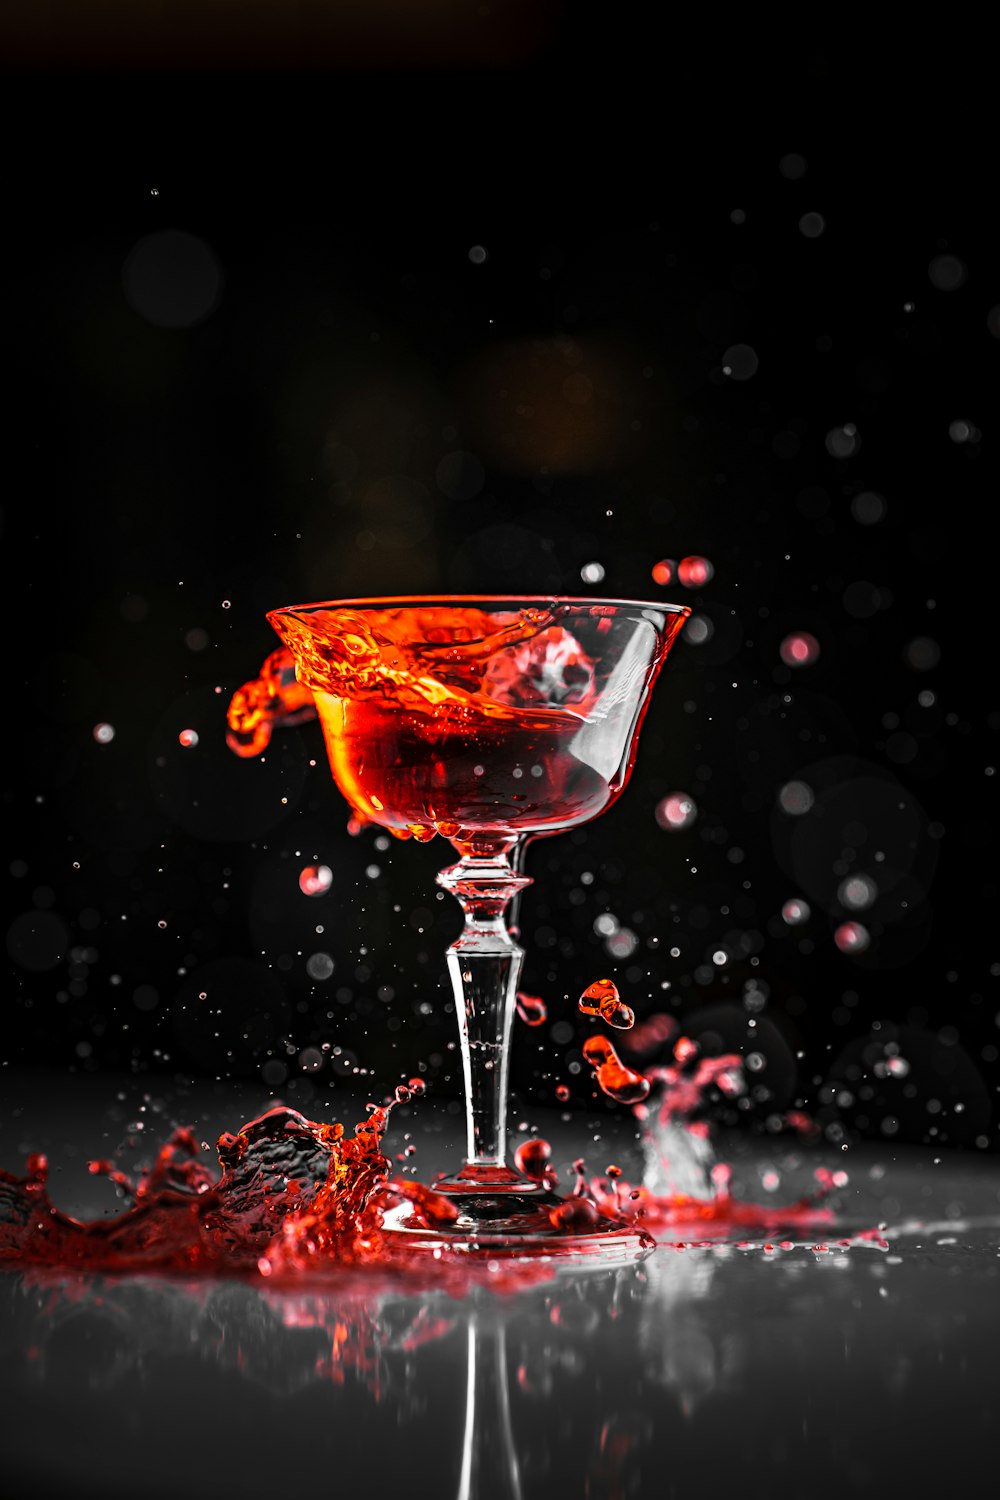 an orange liquid splashing out of a wine glass